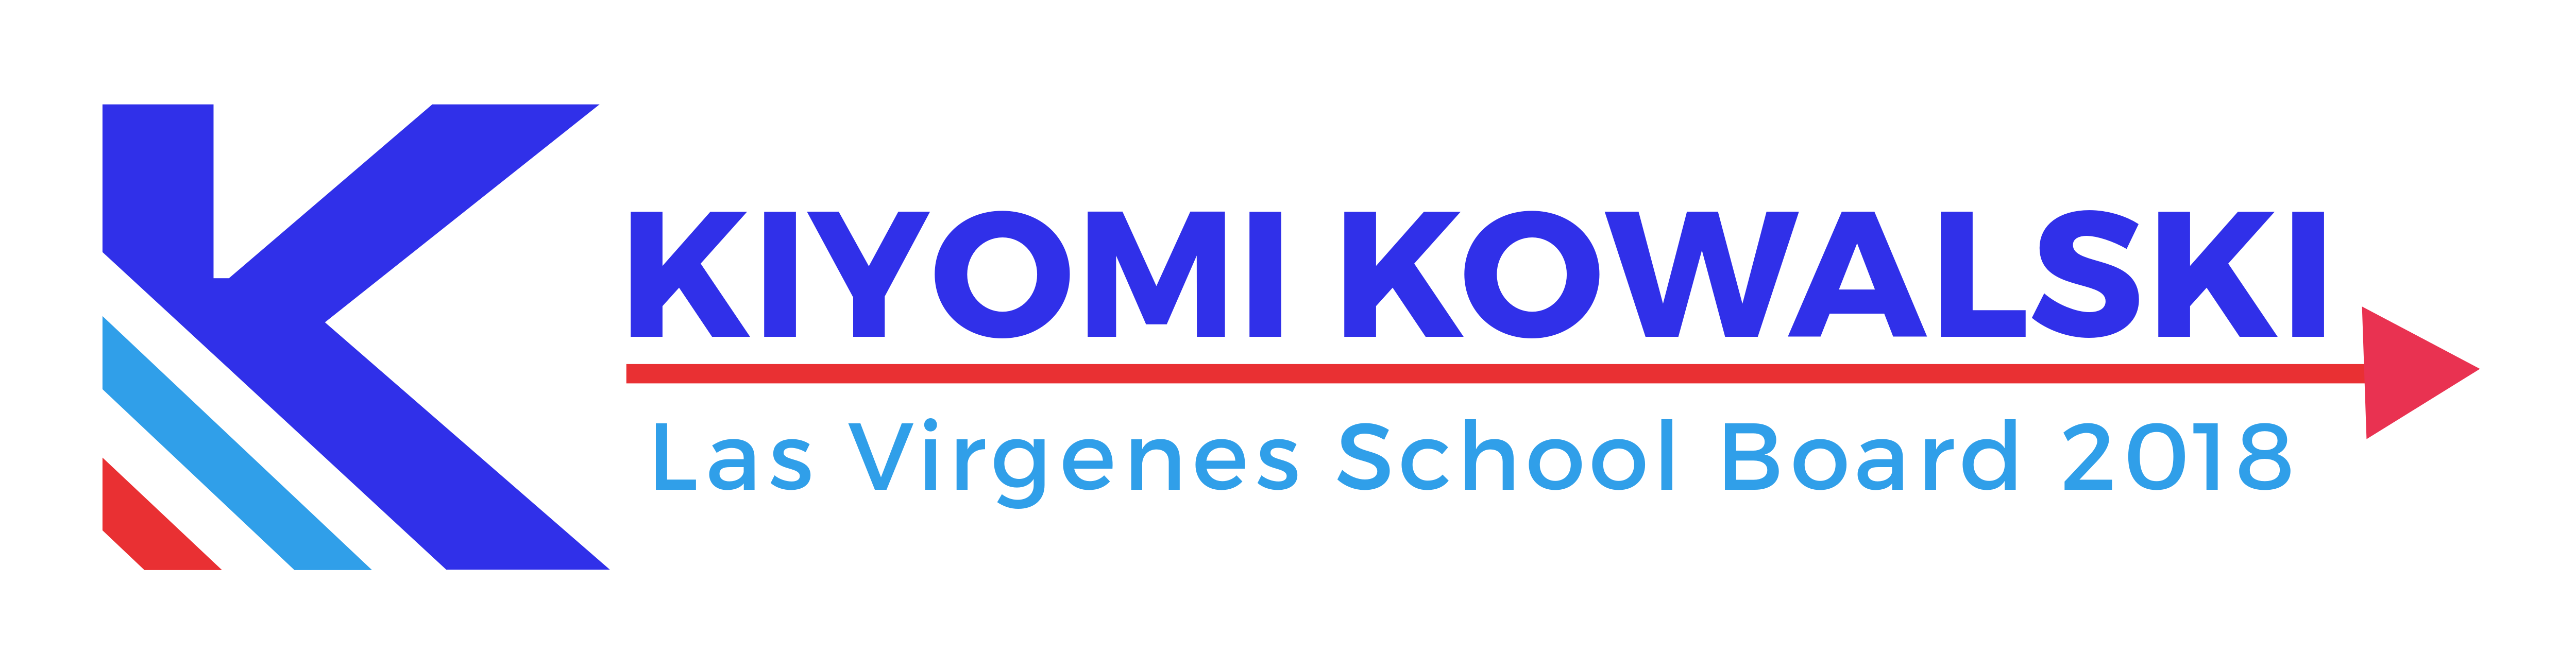 Kiyomi Kowalski for Las Virgenes School Board 2020 logo